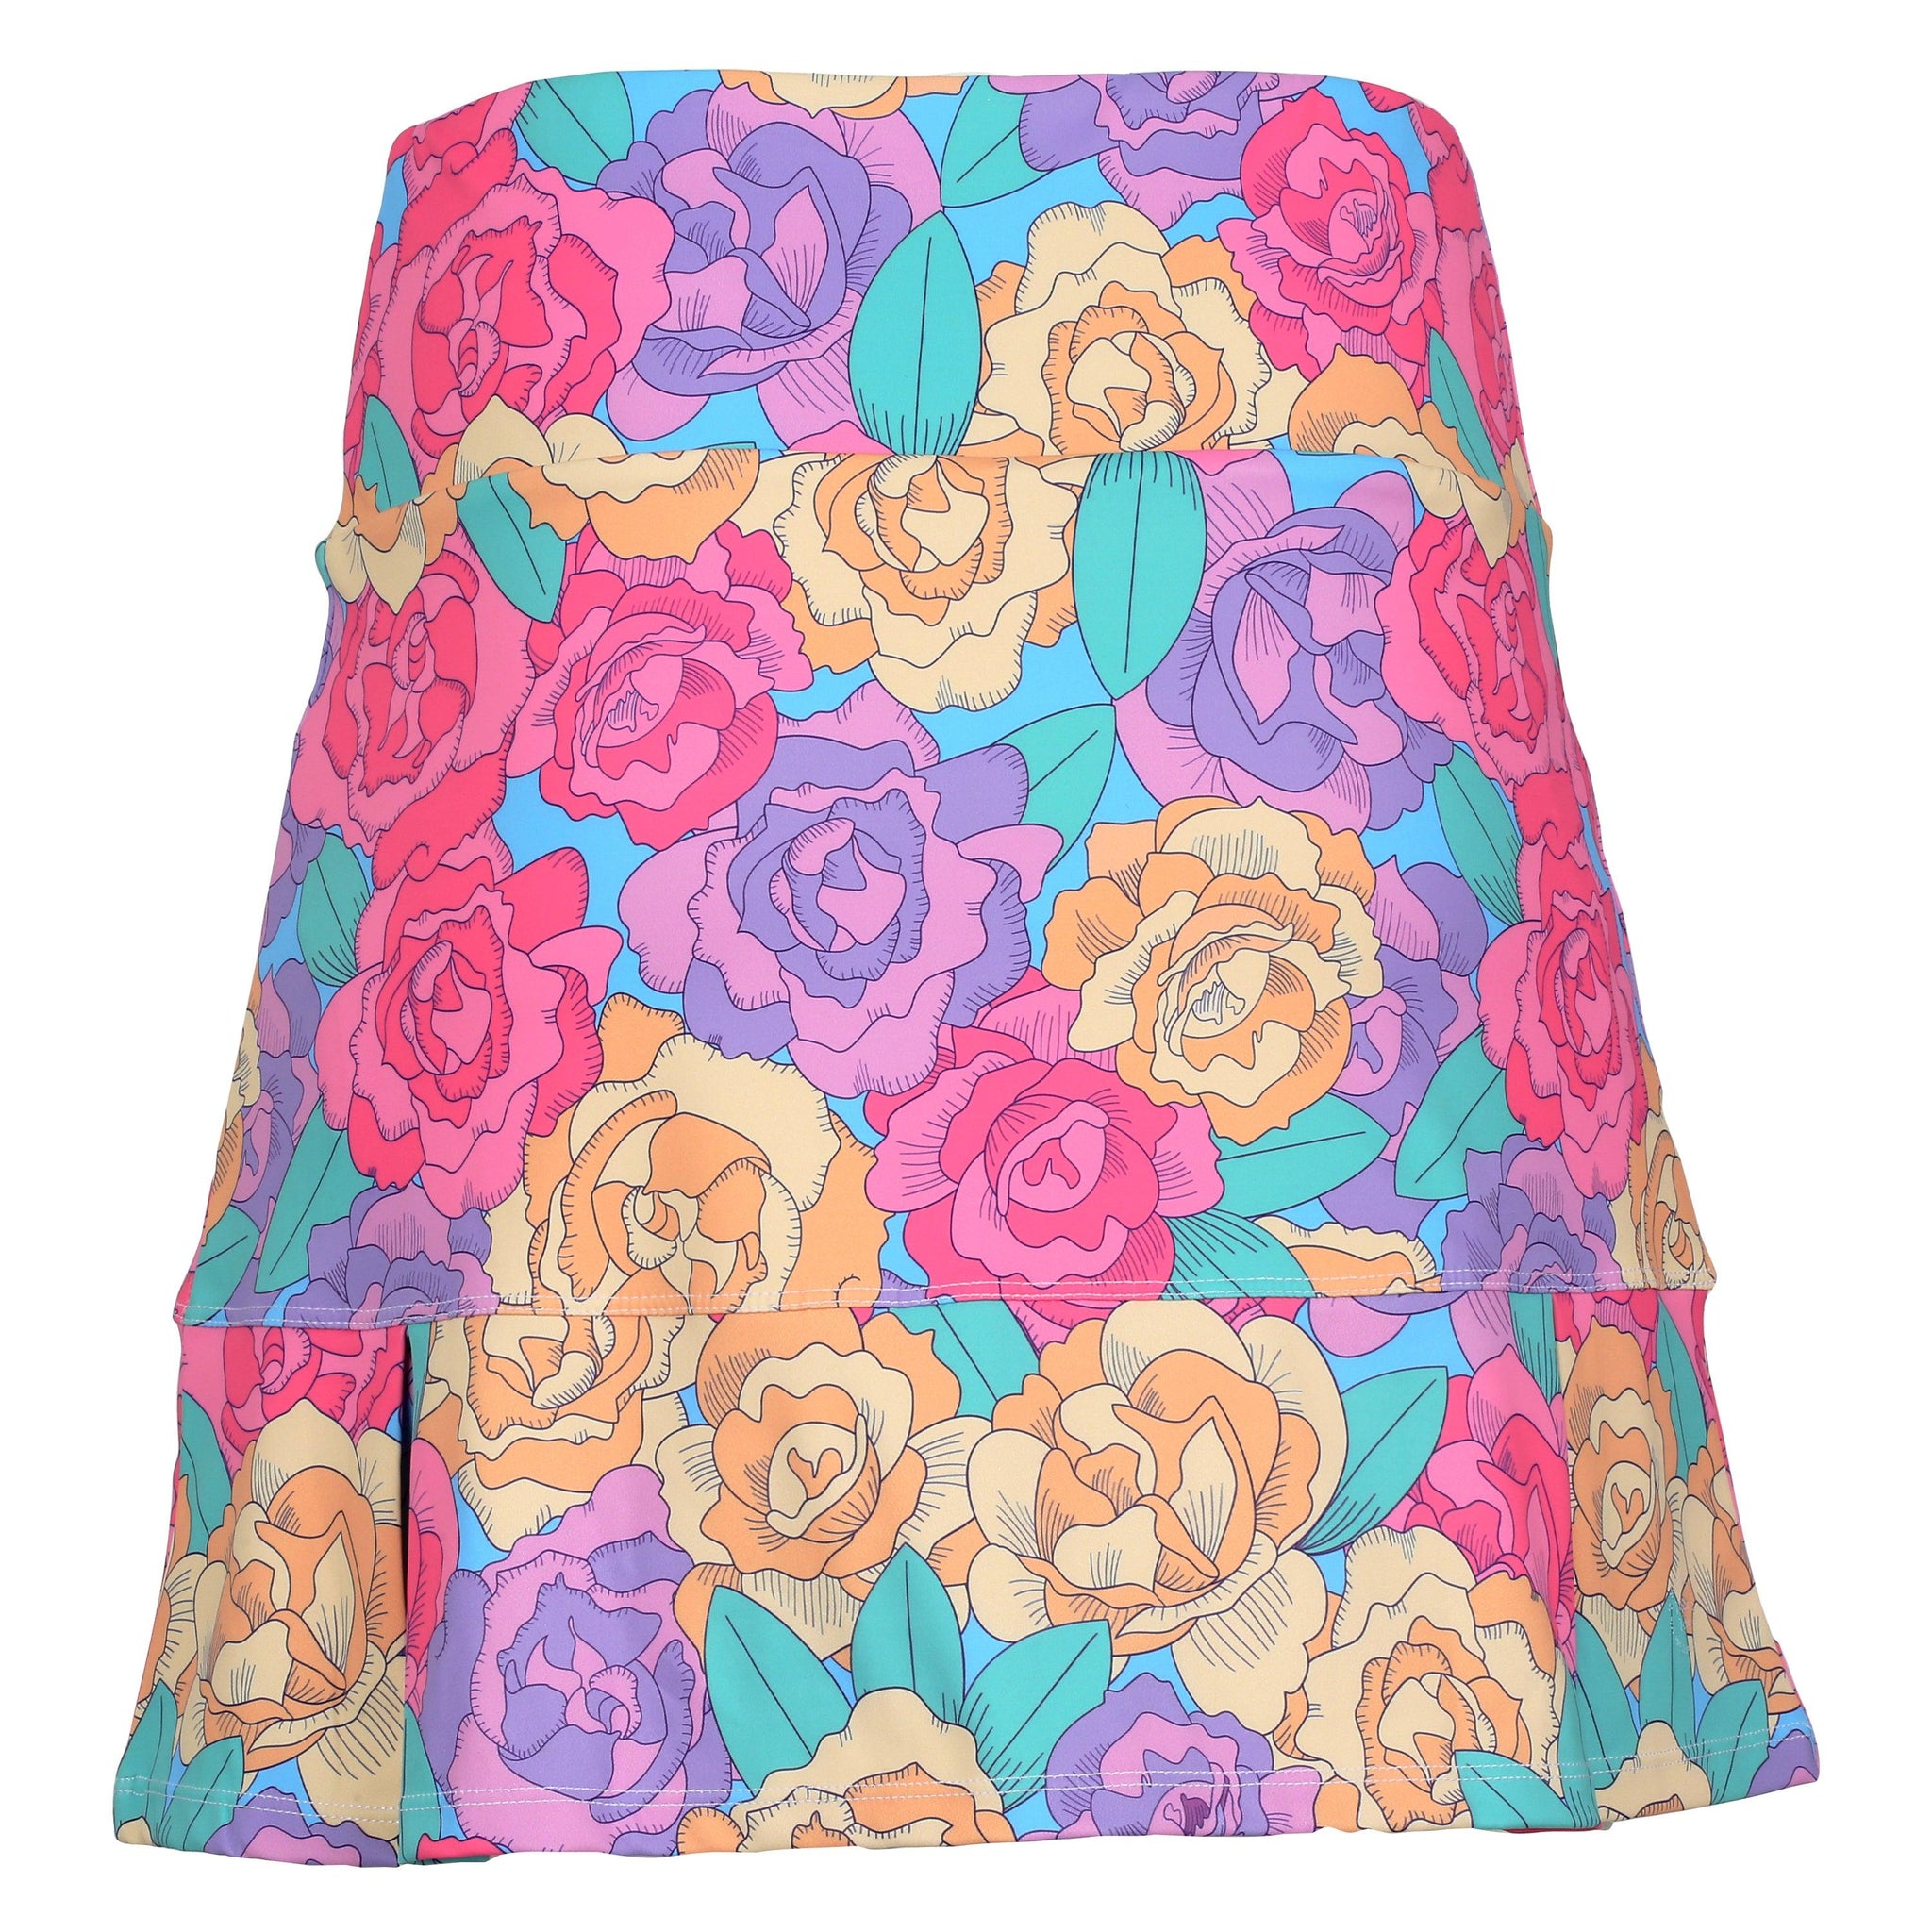 Rosy Day Women's Golf Skirt and Tennis Skort - Millie Rose Designs